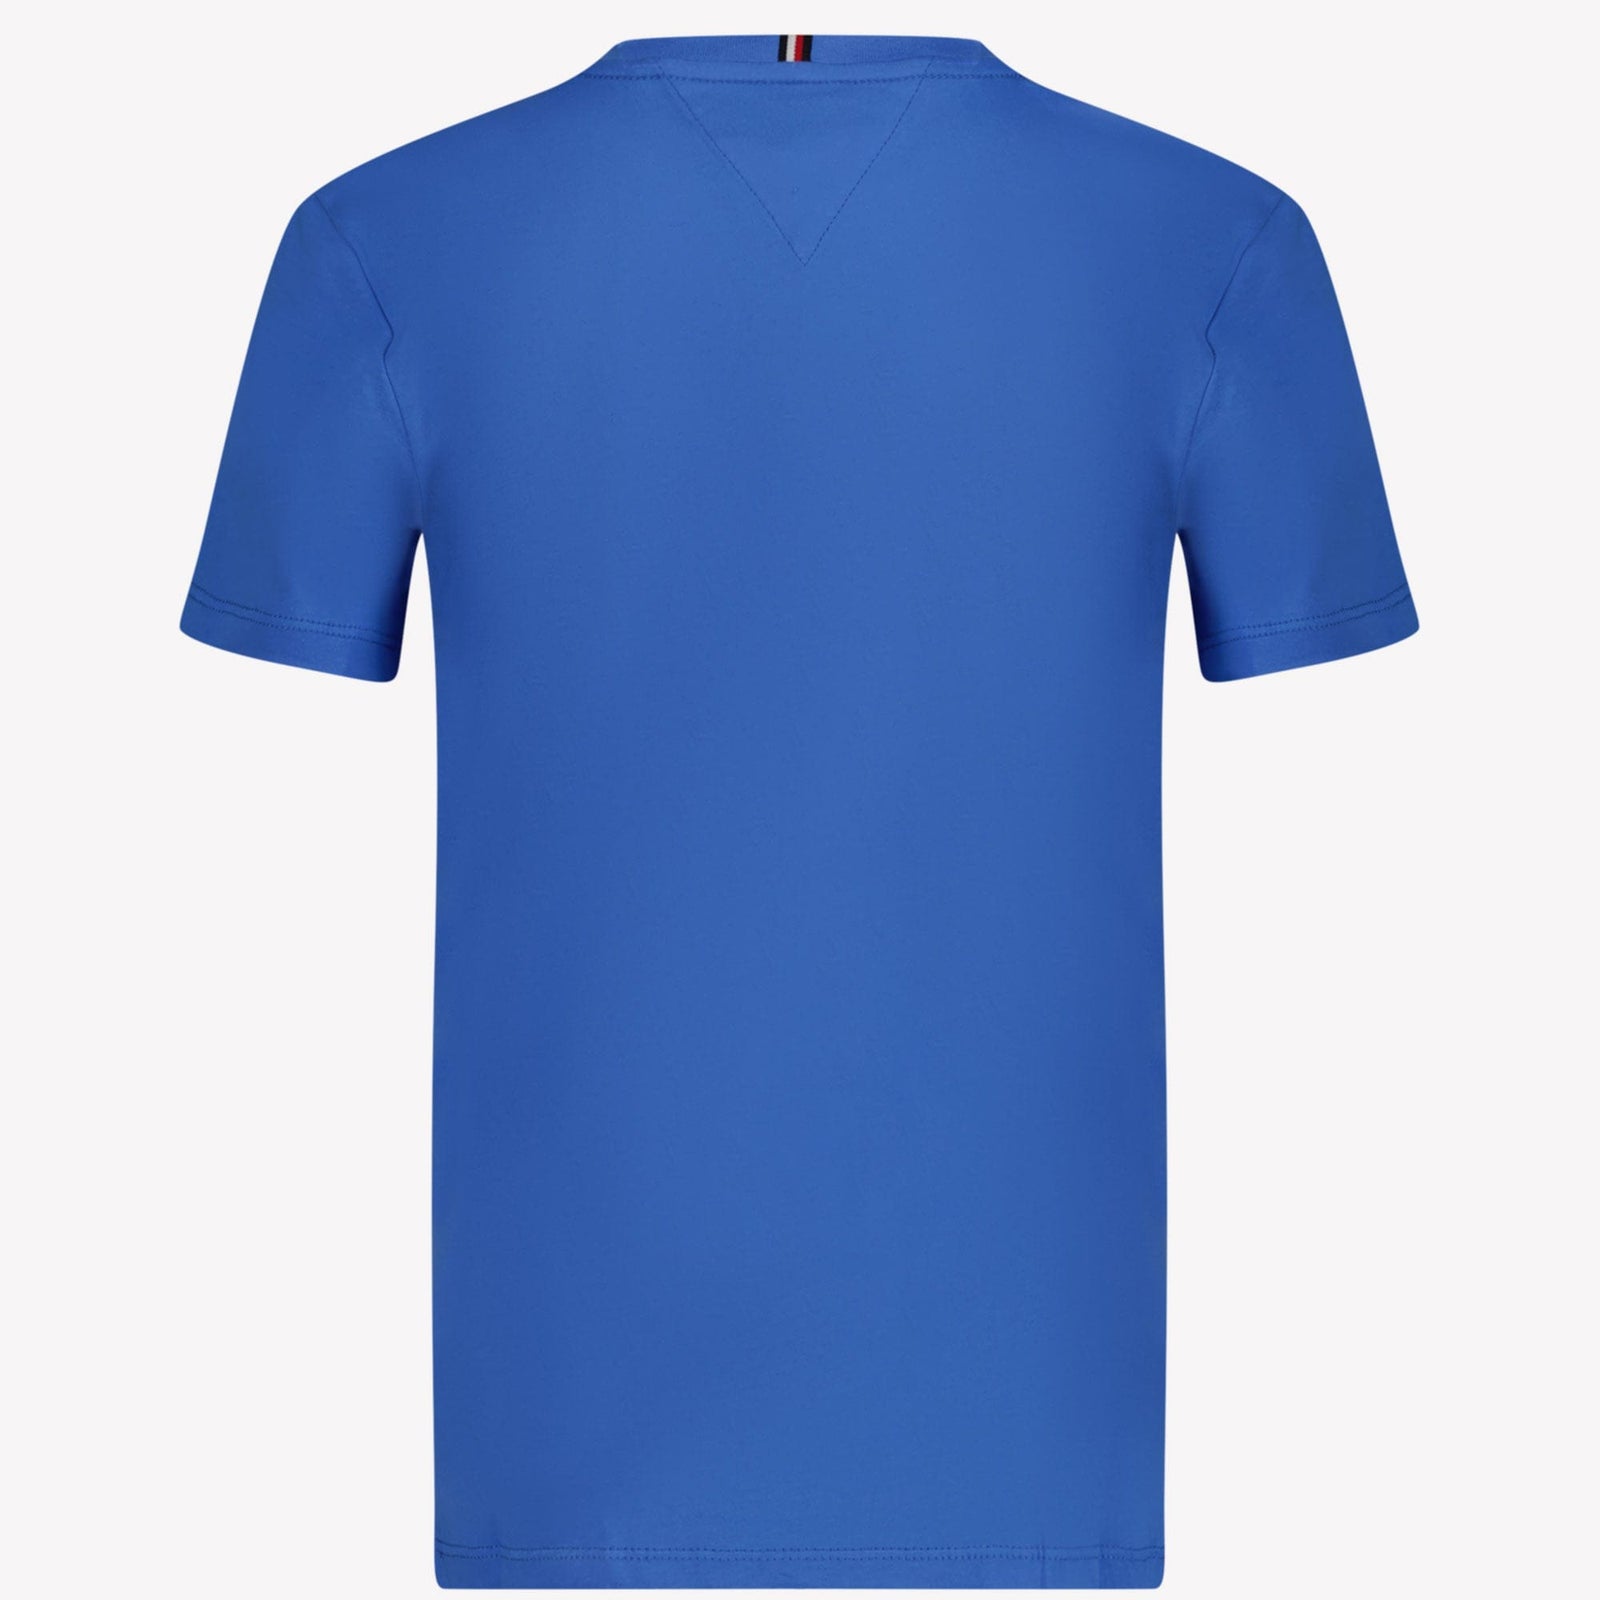 Tommy Hilfiger Kinder Jongens T-shirt Blauw 4Y